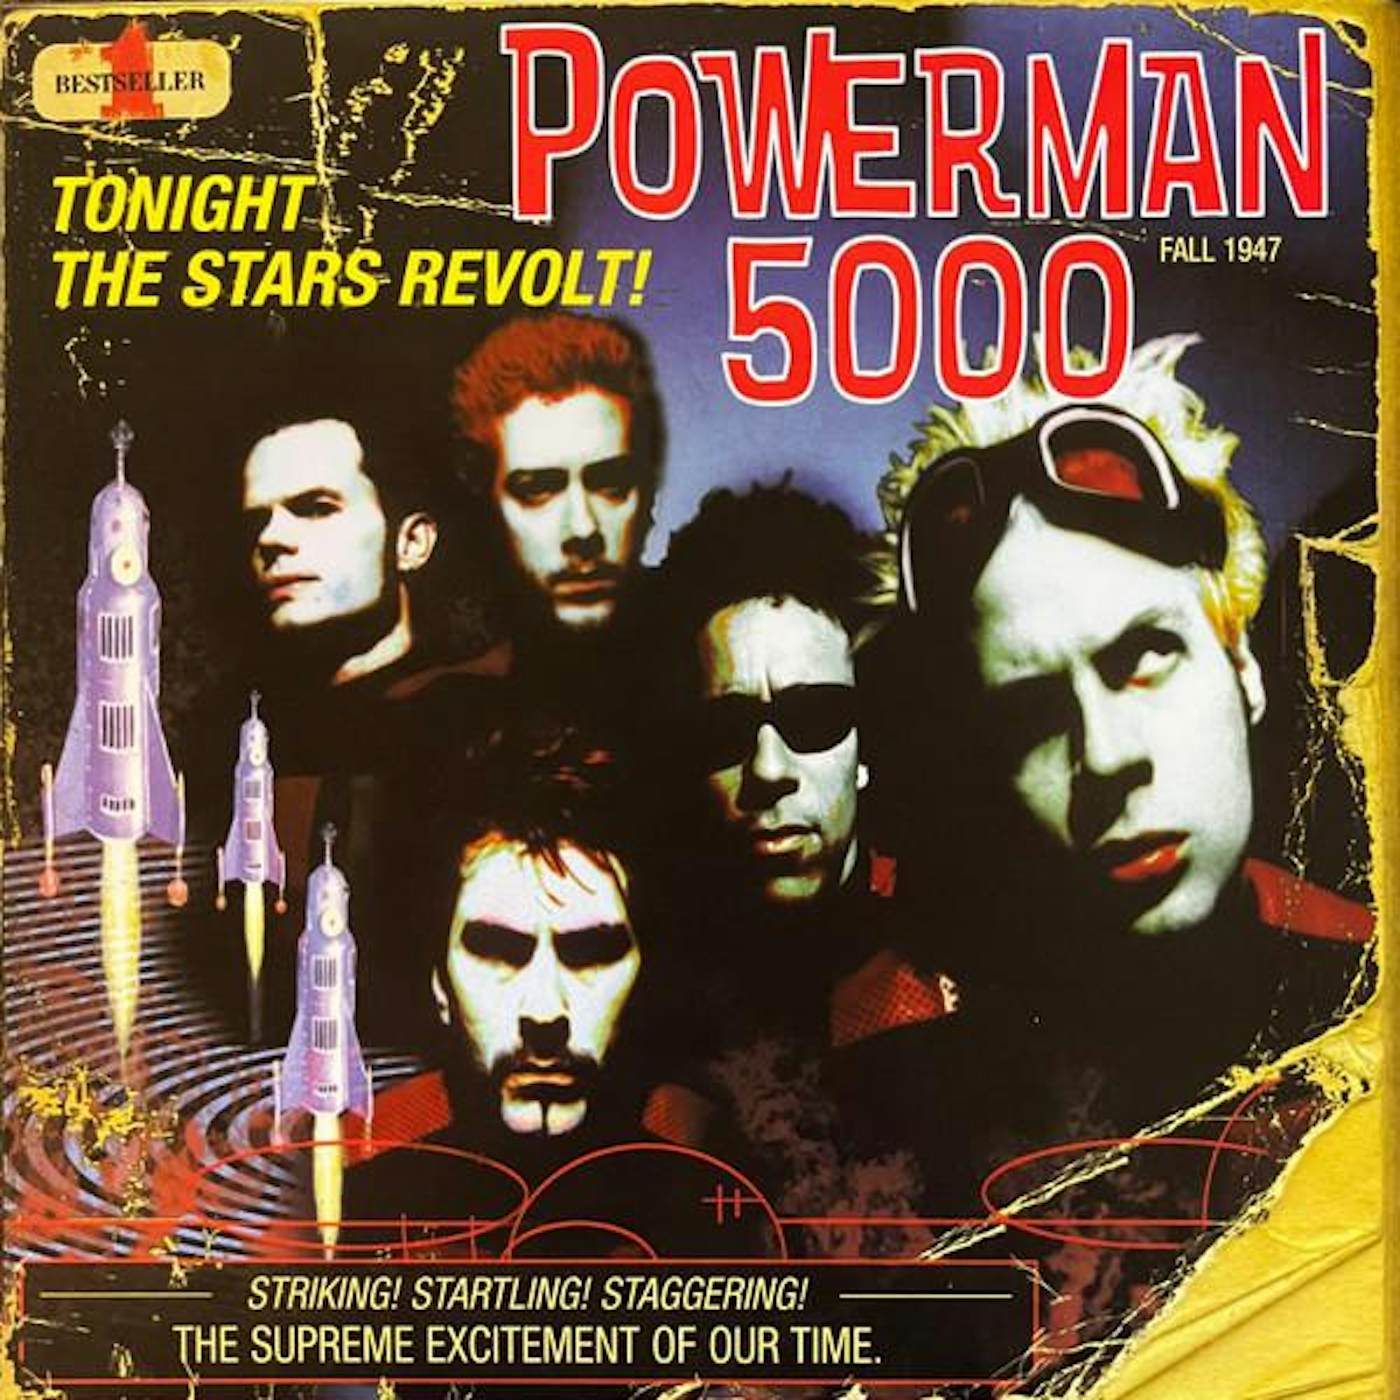 Powerman 5000 Tonight The Stars Revolt! (Coke Clear W/ Bright Yellow Streaks) Vinyl Record